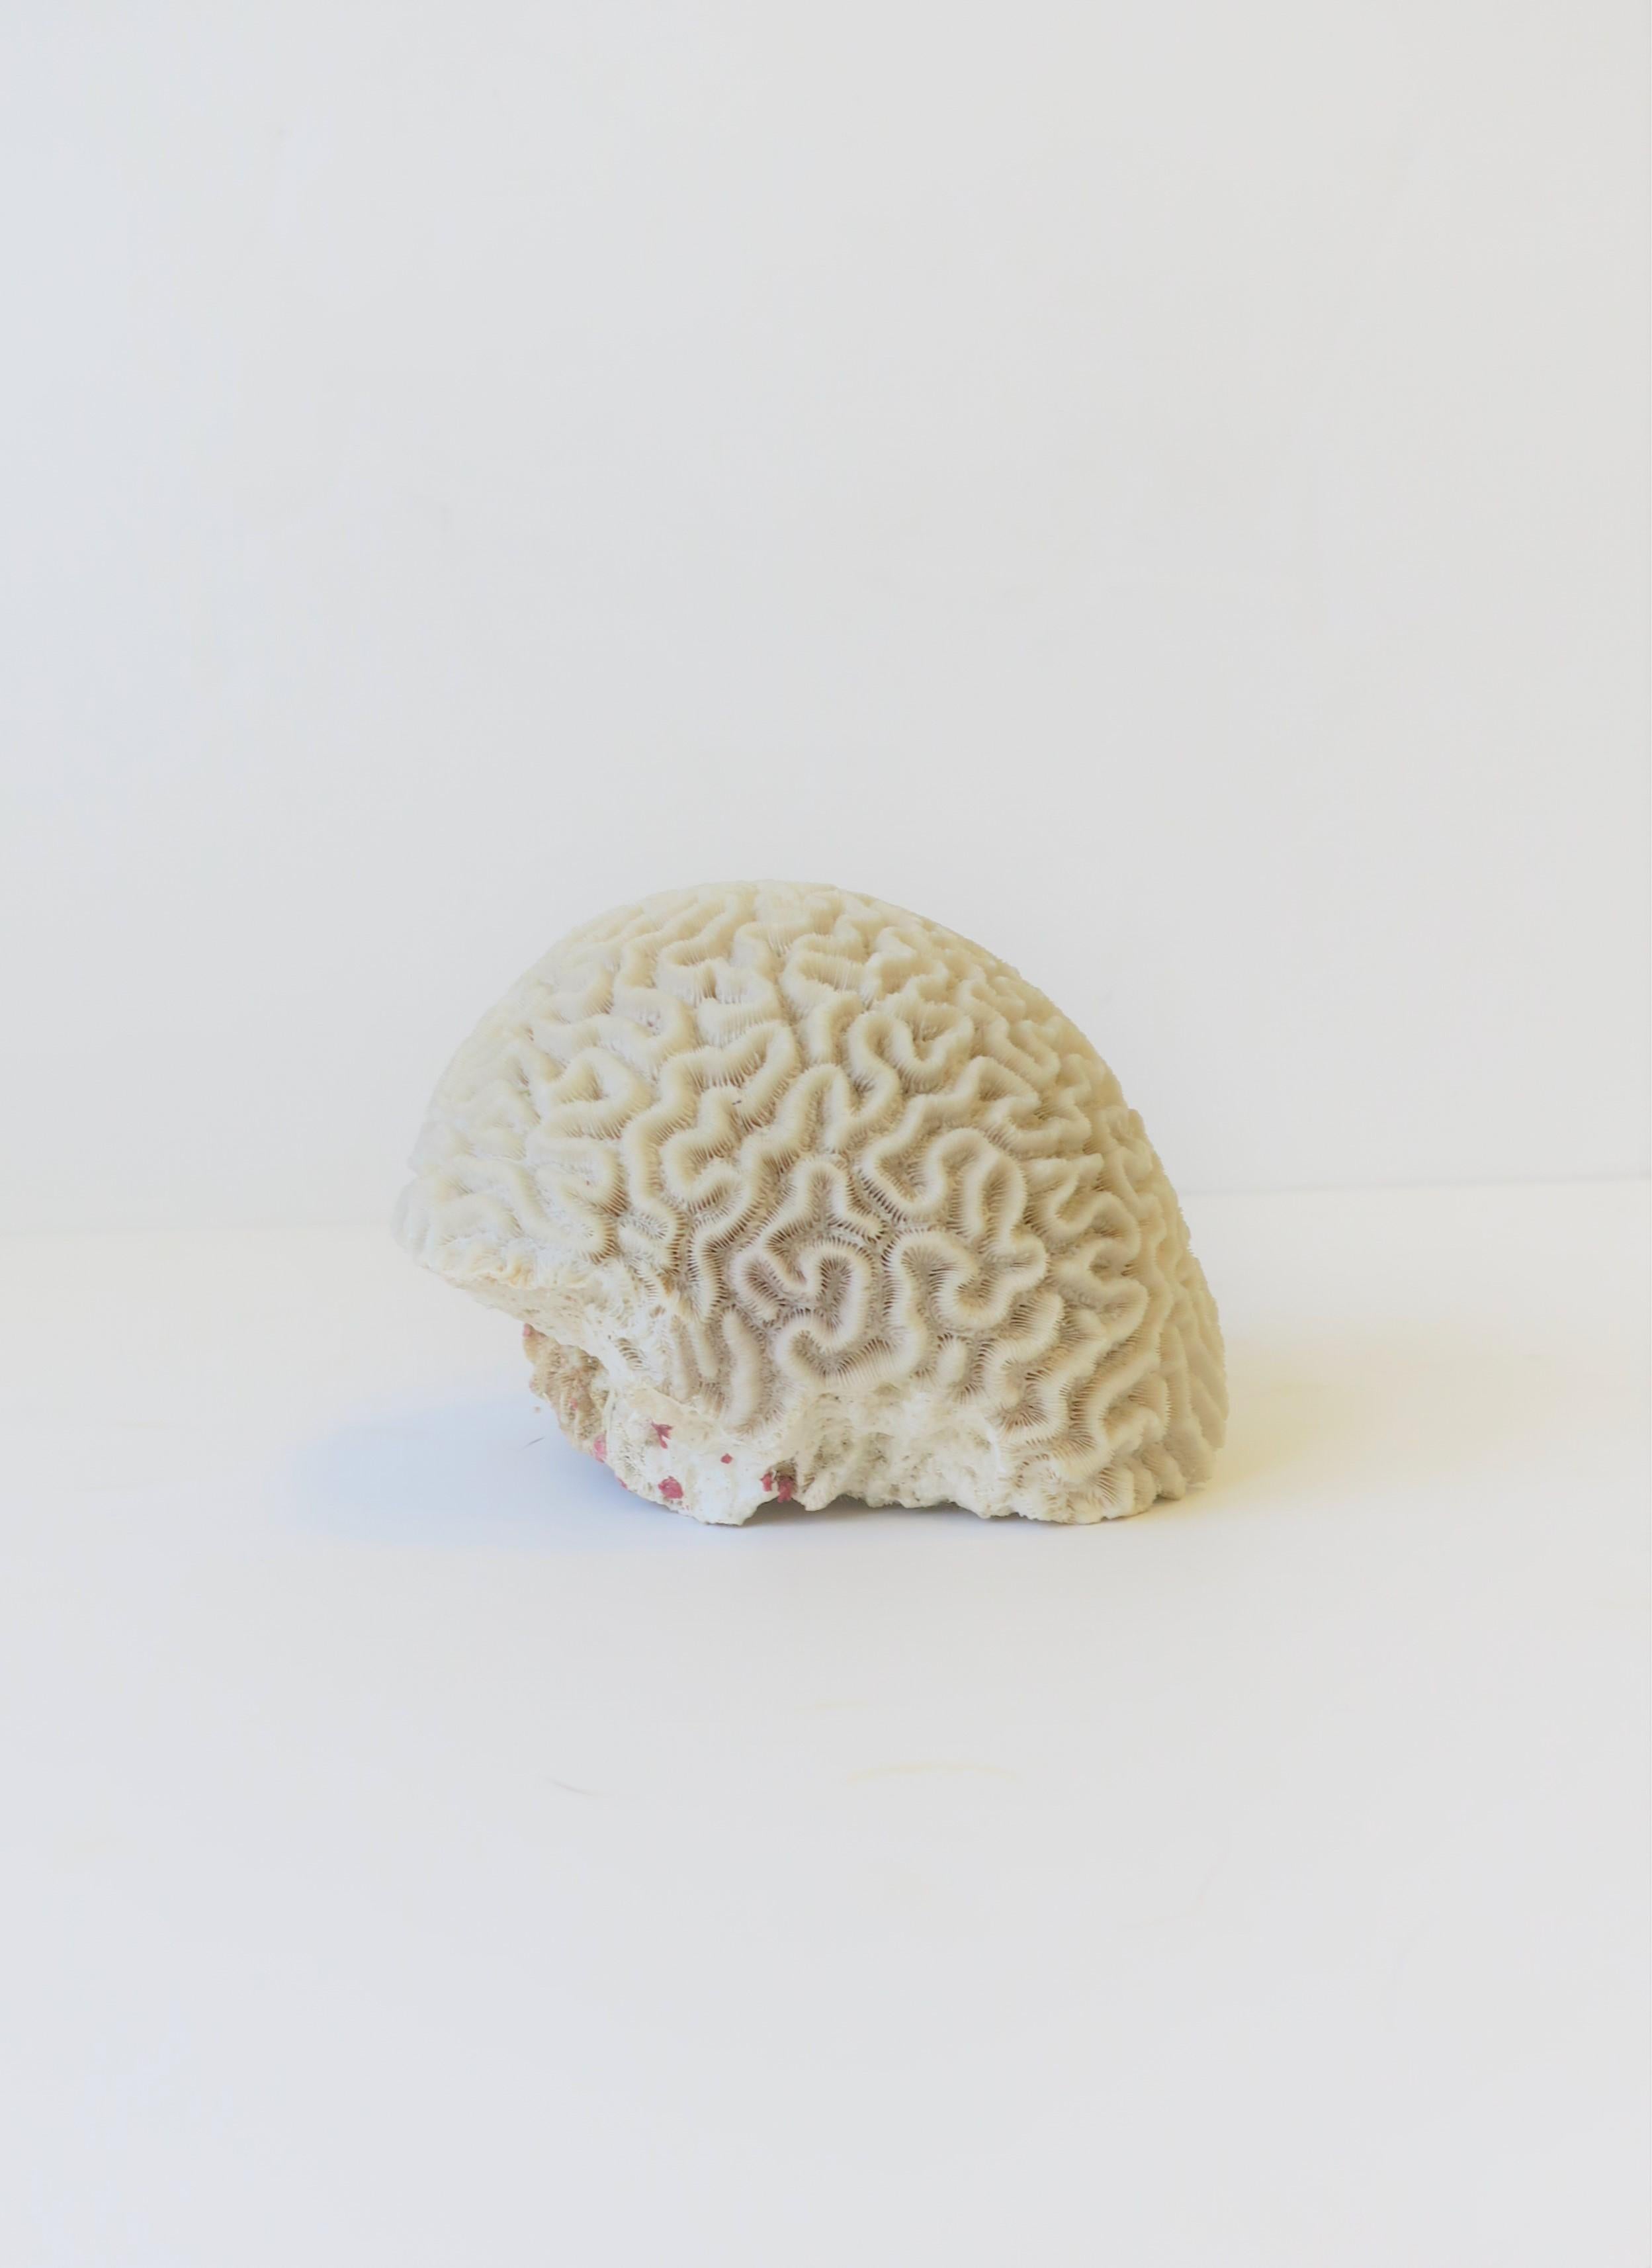 Unknown Natural White Brain Coral